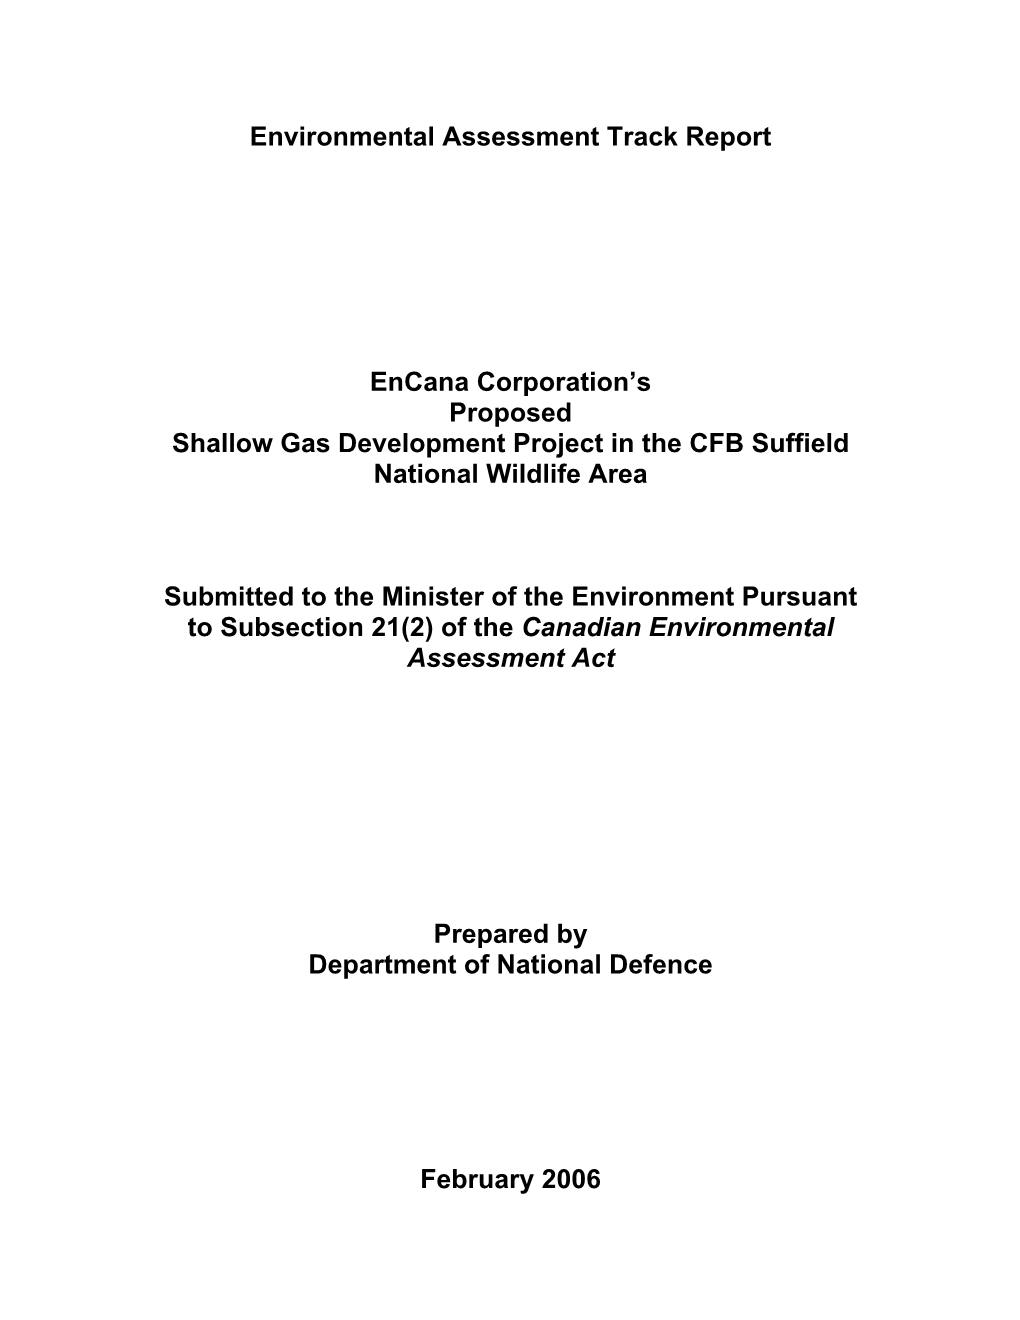 Environmental Assessment Track Report Encana Corporation's